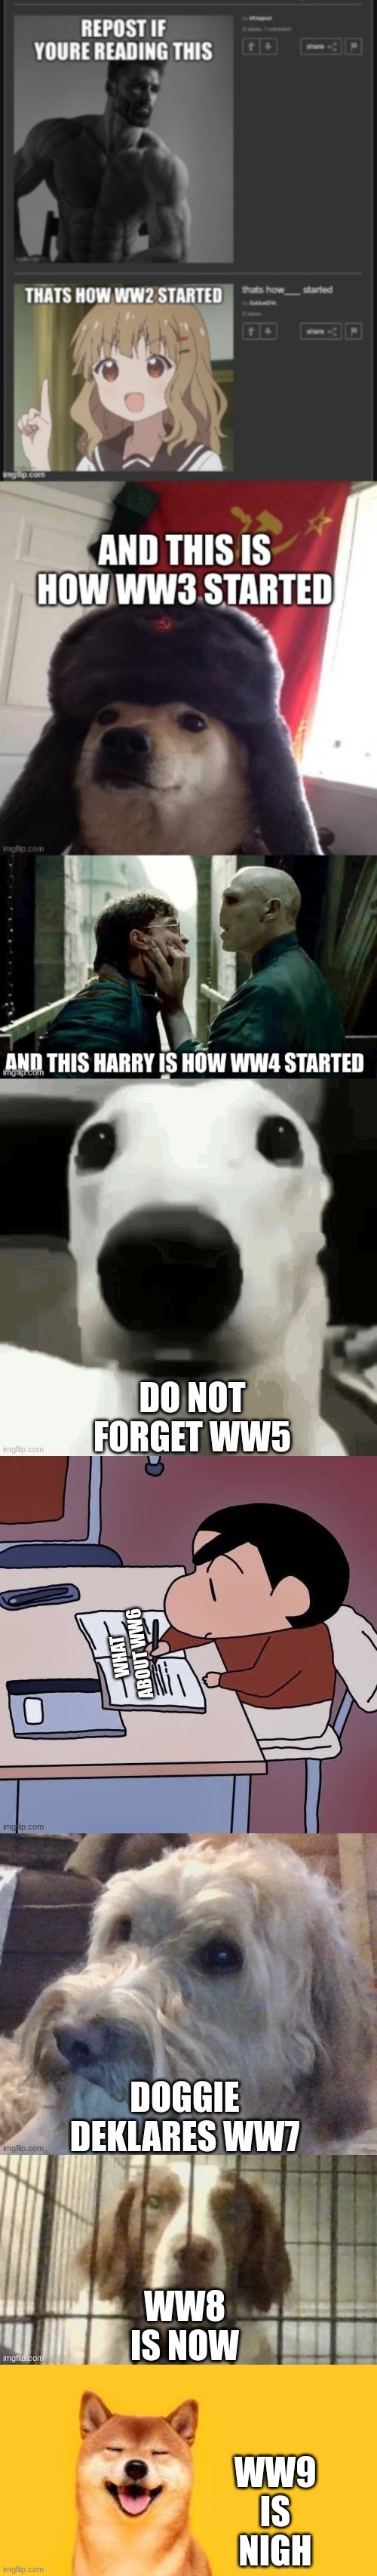 WW9 IS NIGH | made w/ Imgflip meme maker